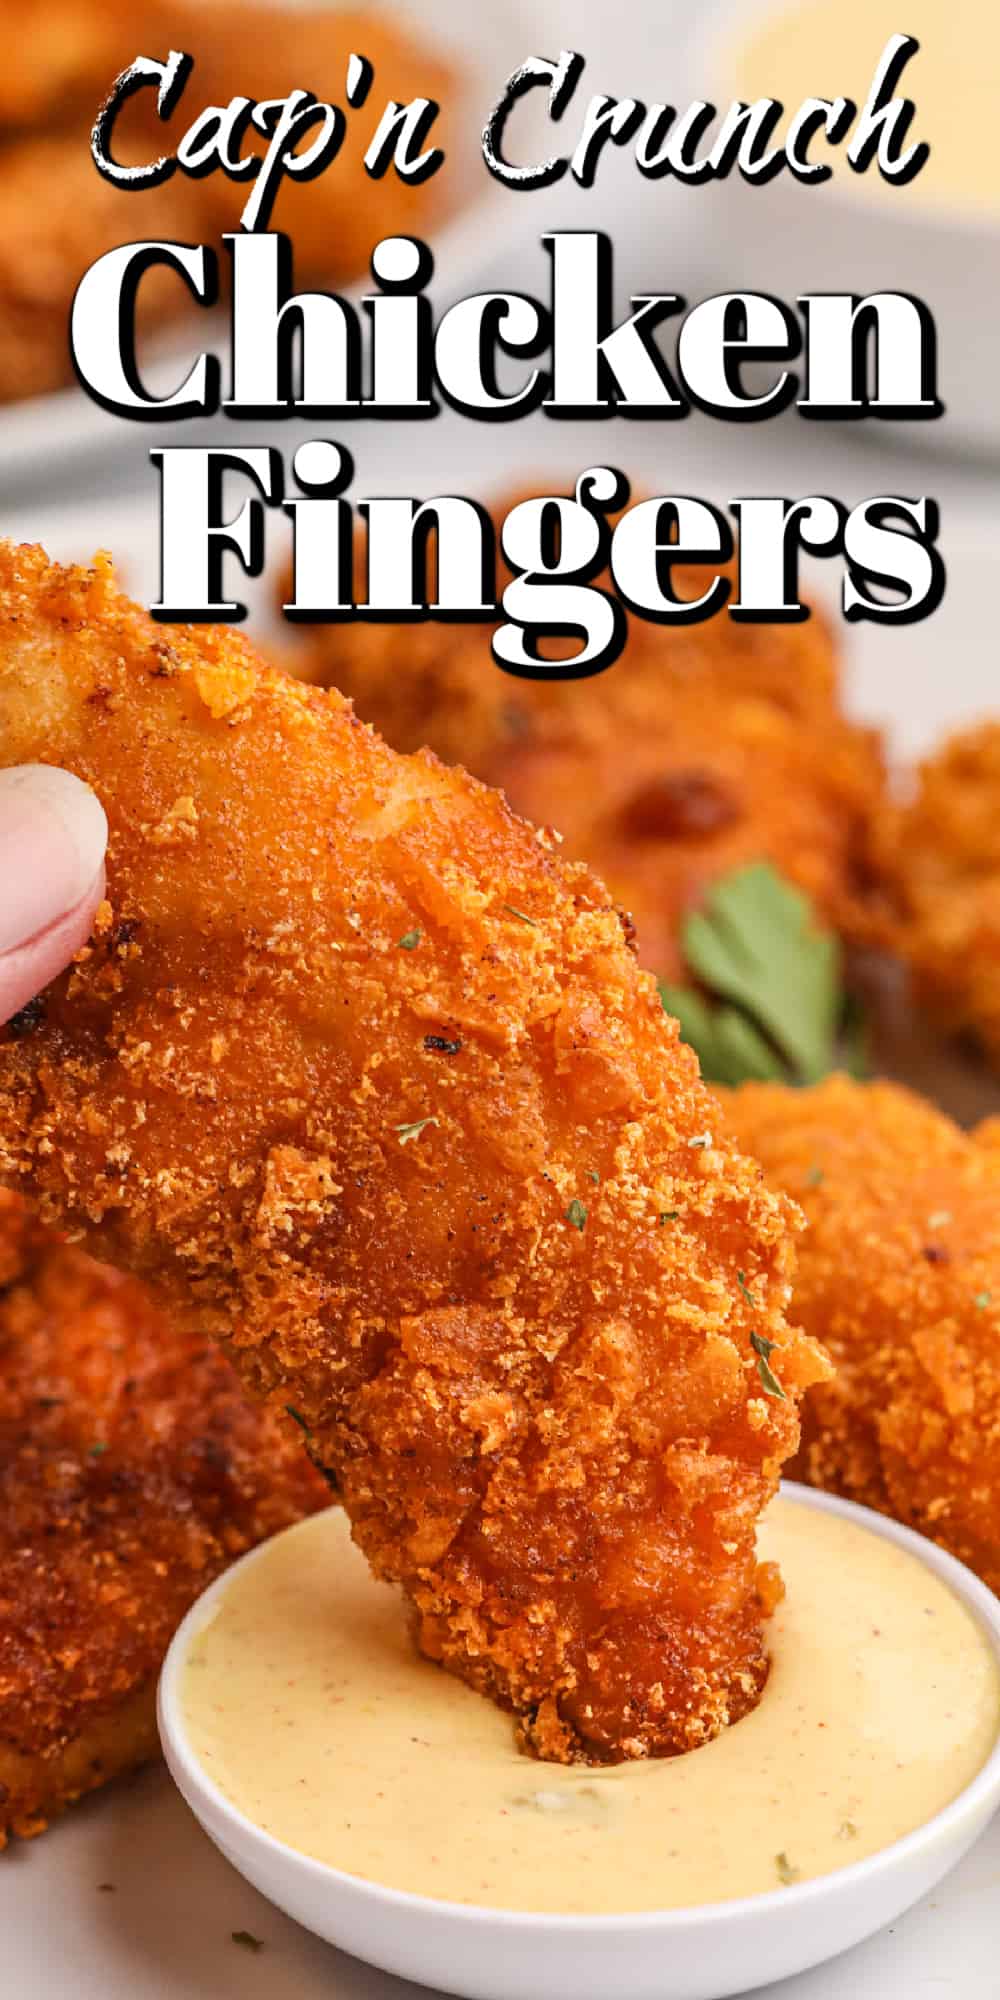 Cap'n Crunch Chicken Fingers Recipe Pin